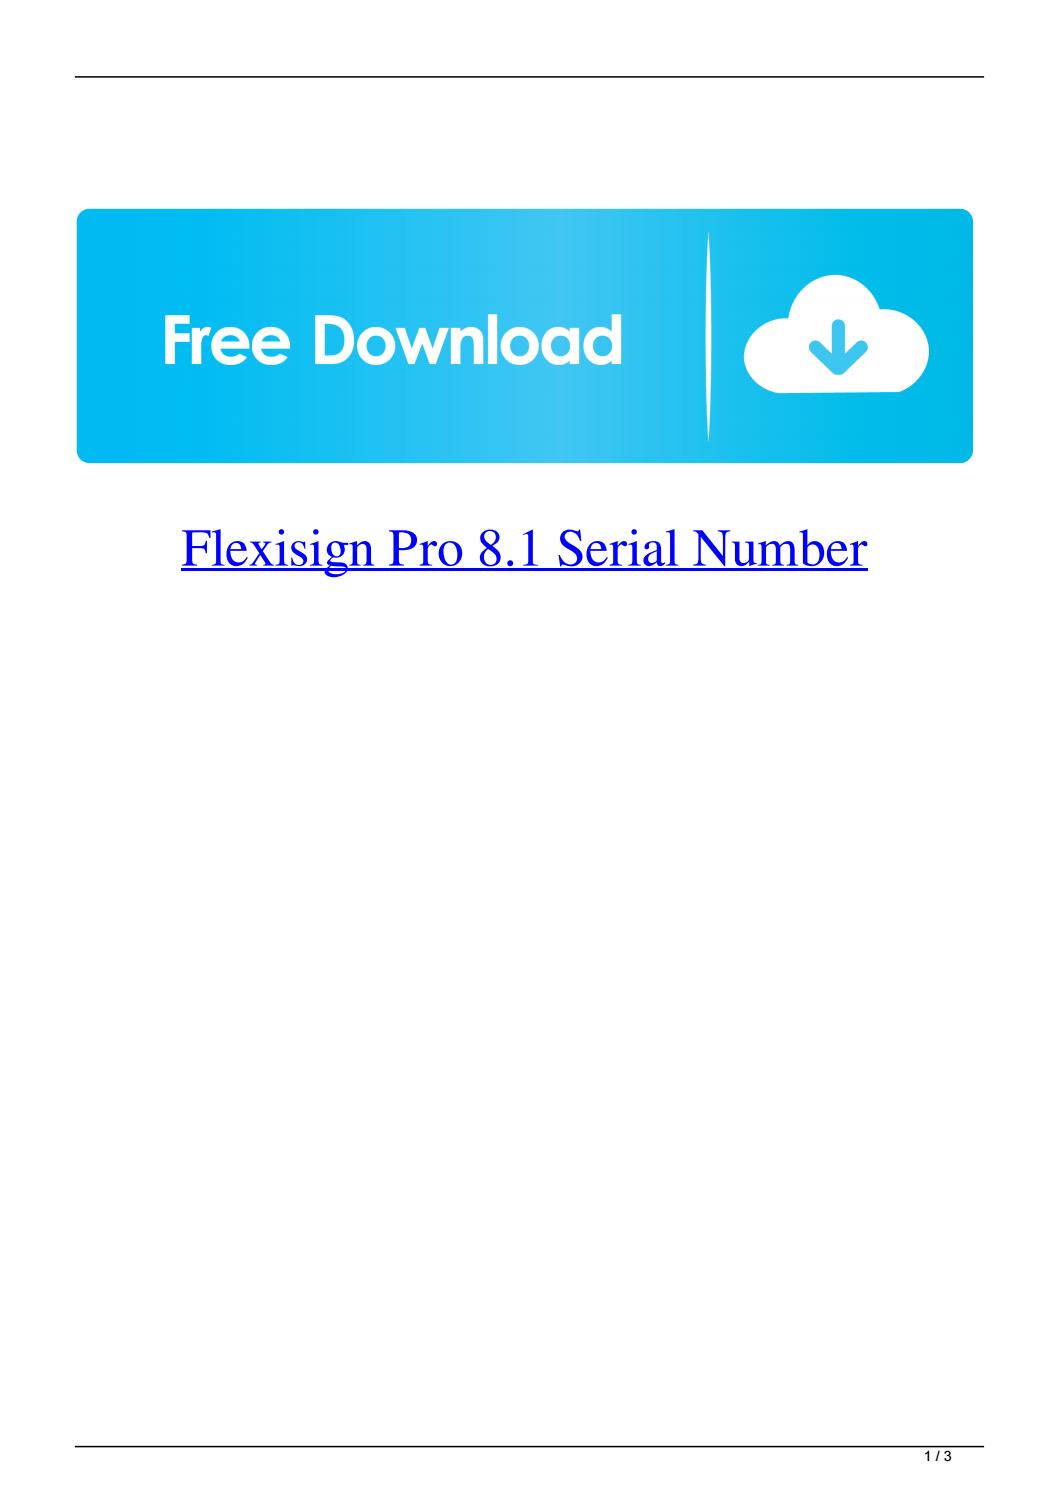 flexisign pro 8.1 crack free download